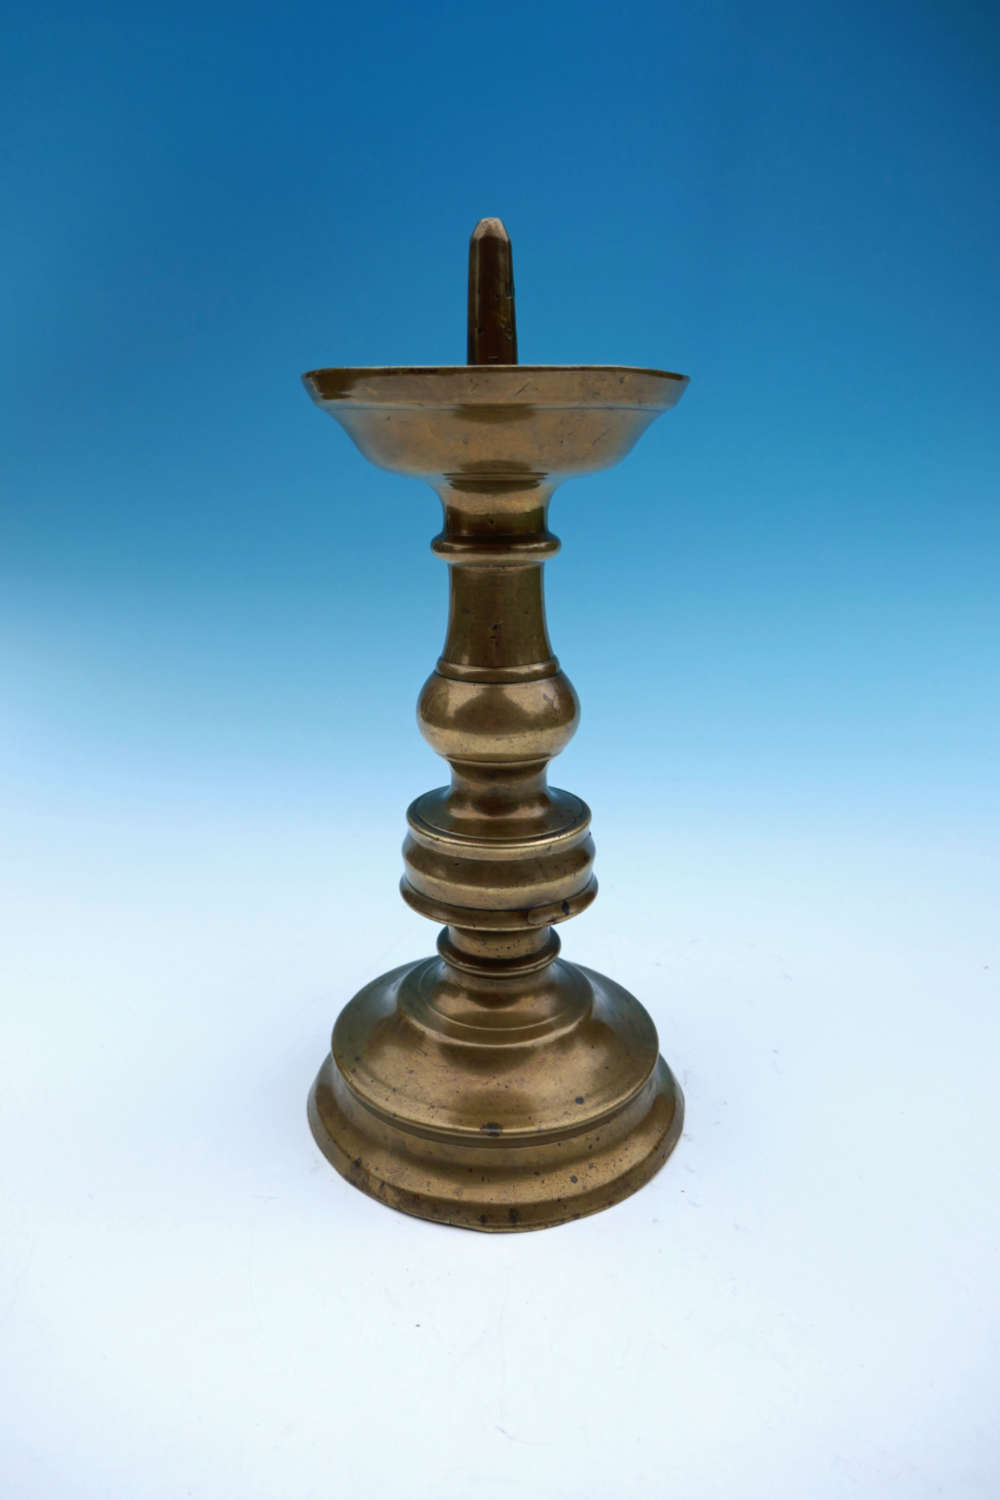 Antique 16thc Brass Pricket Candlestick. Flemish. C1490-C1520